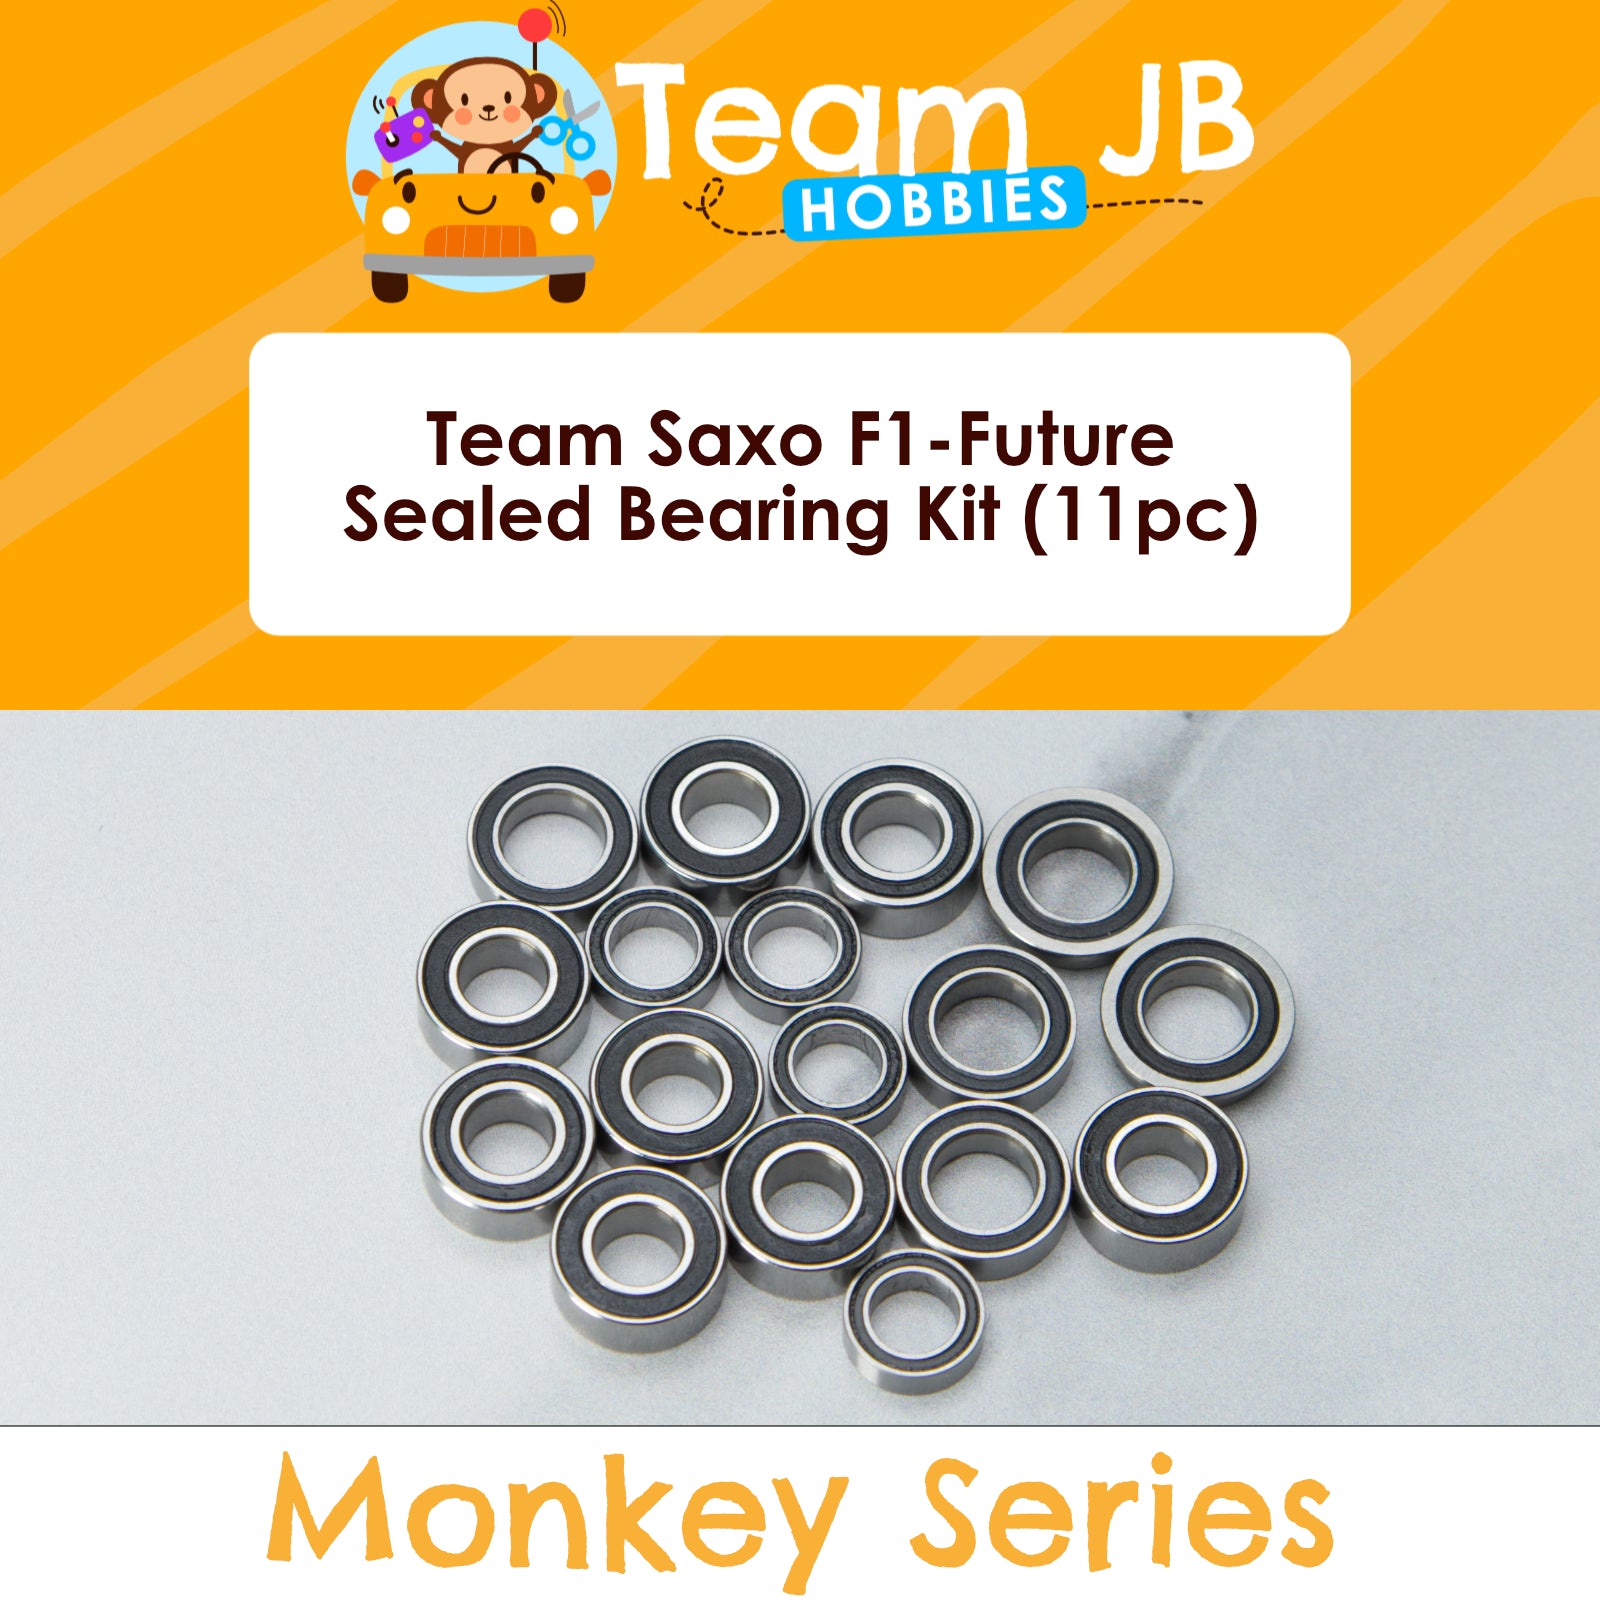 Team Saxo F1-Future - Sealed Bearing Kit